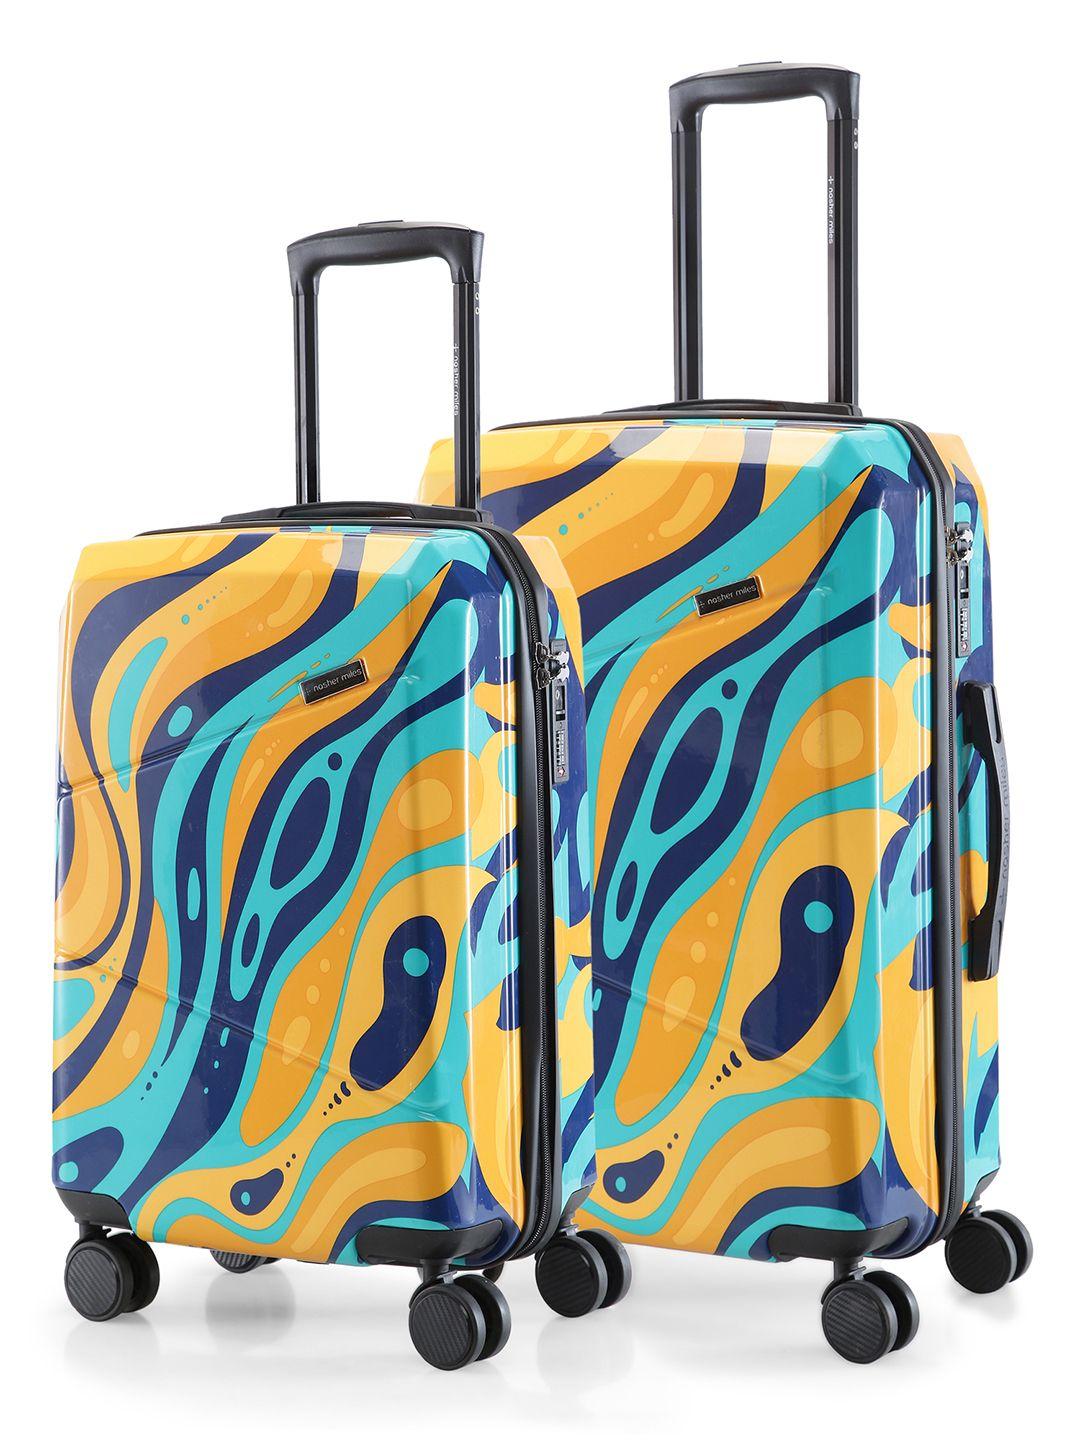 nasher miles set of 2 yellow & blue hard-sided polycarbonate luggage